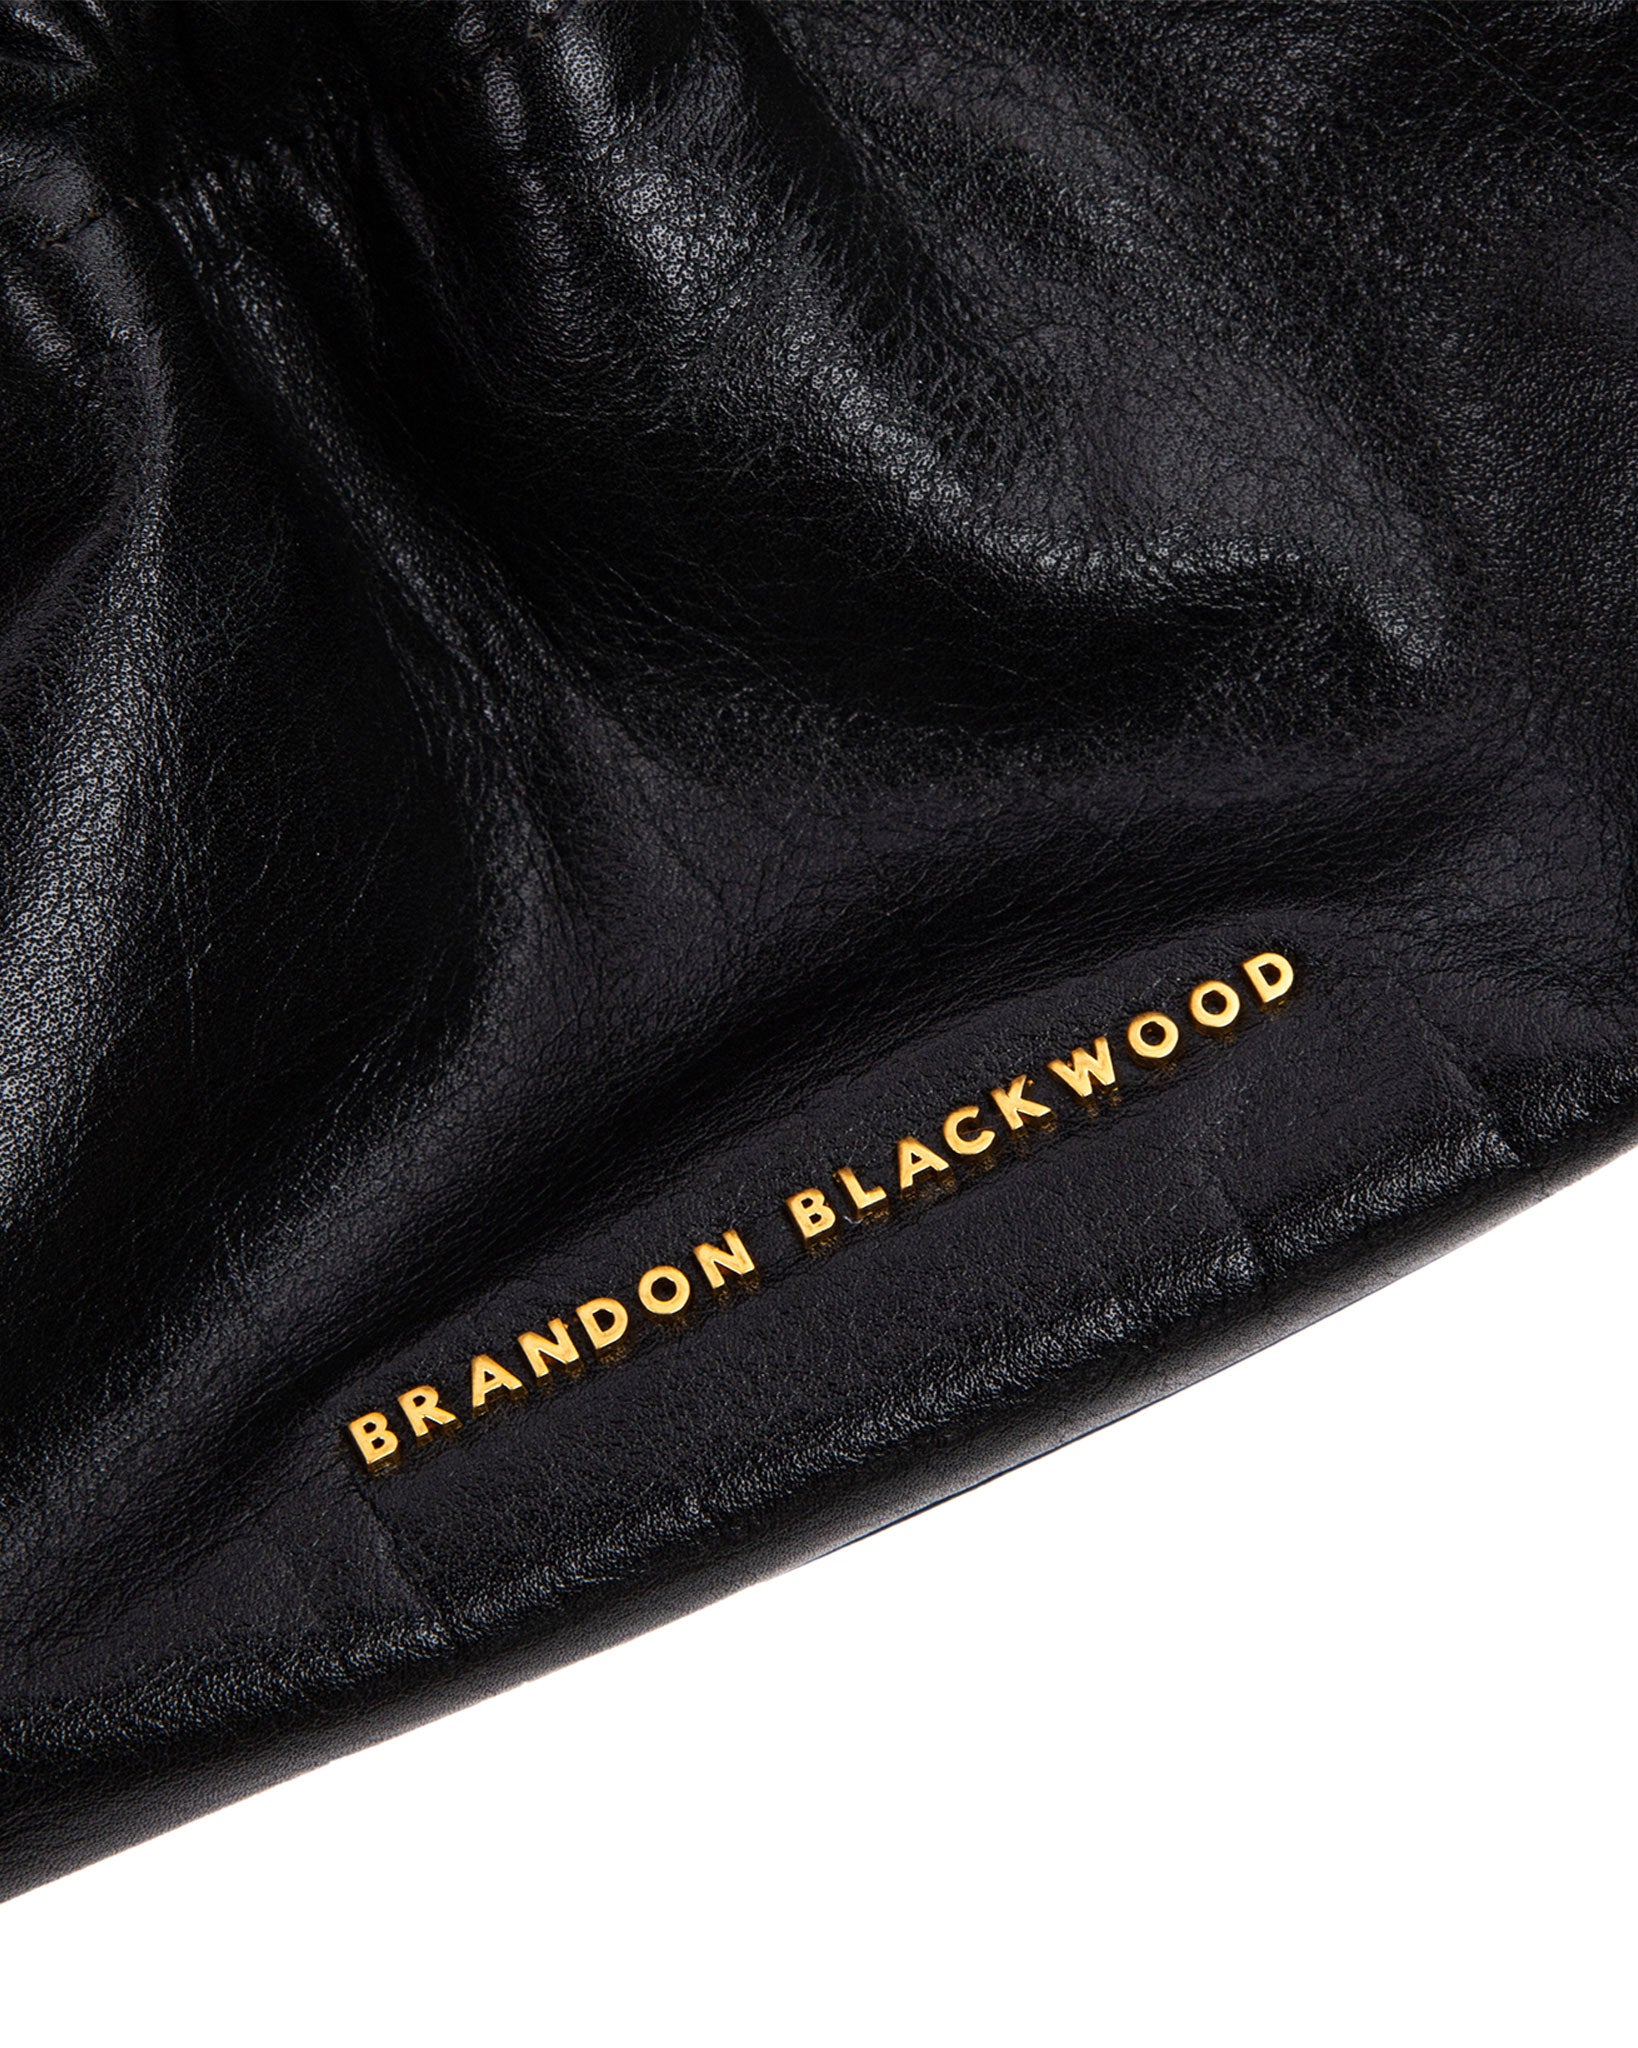 Brandon Blackwood Nora Bag